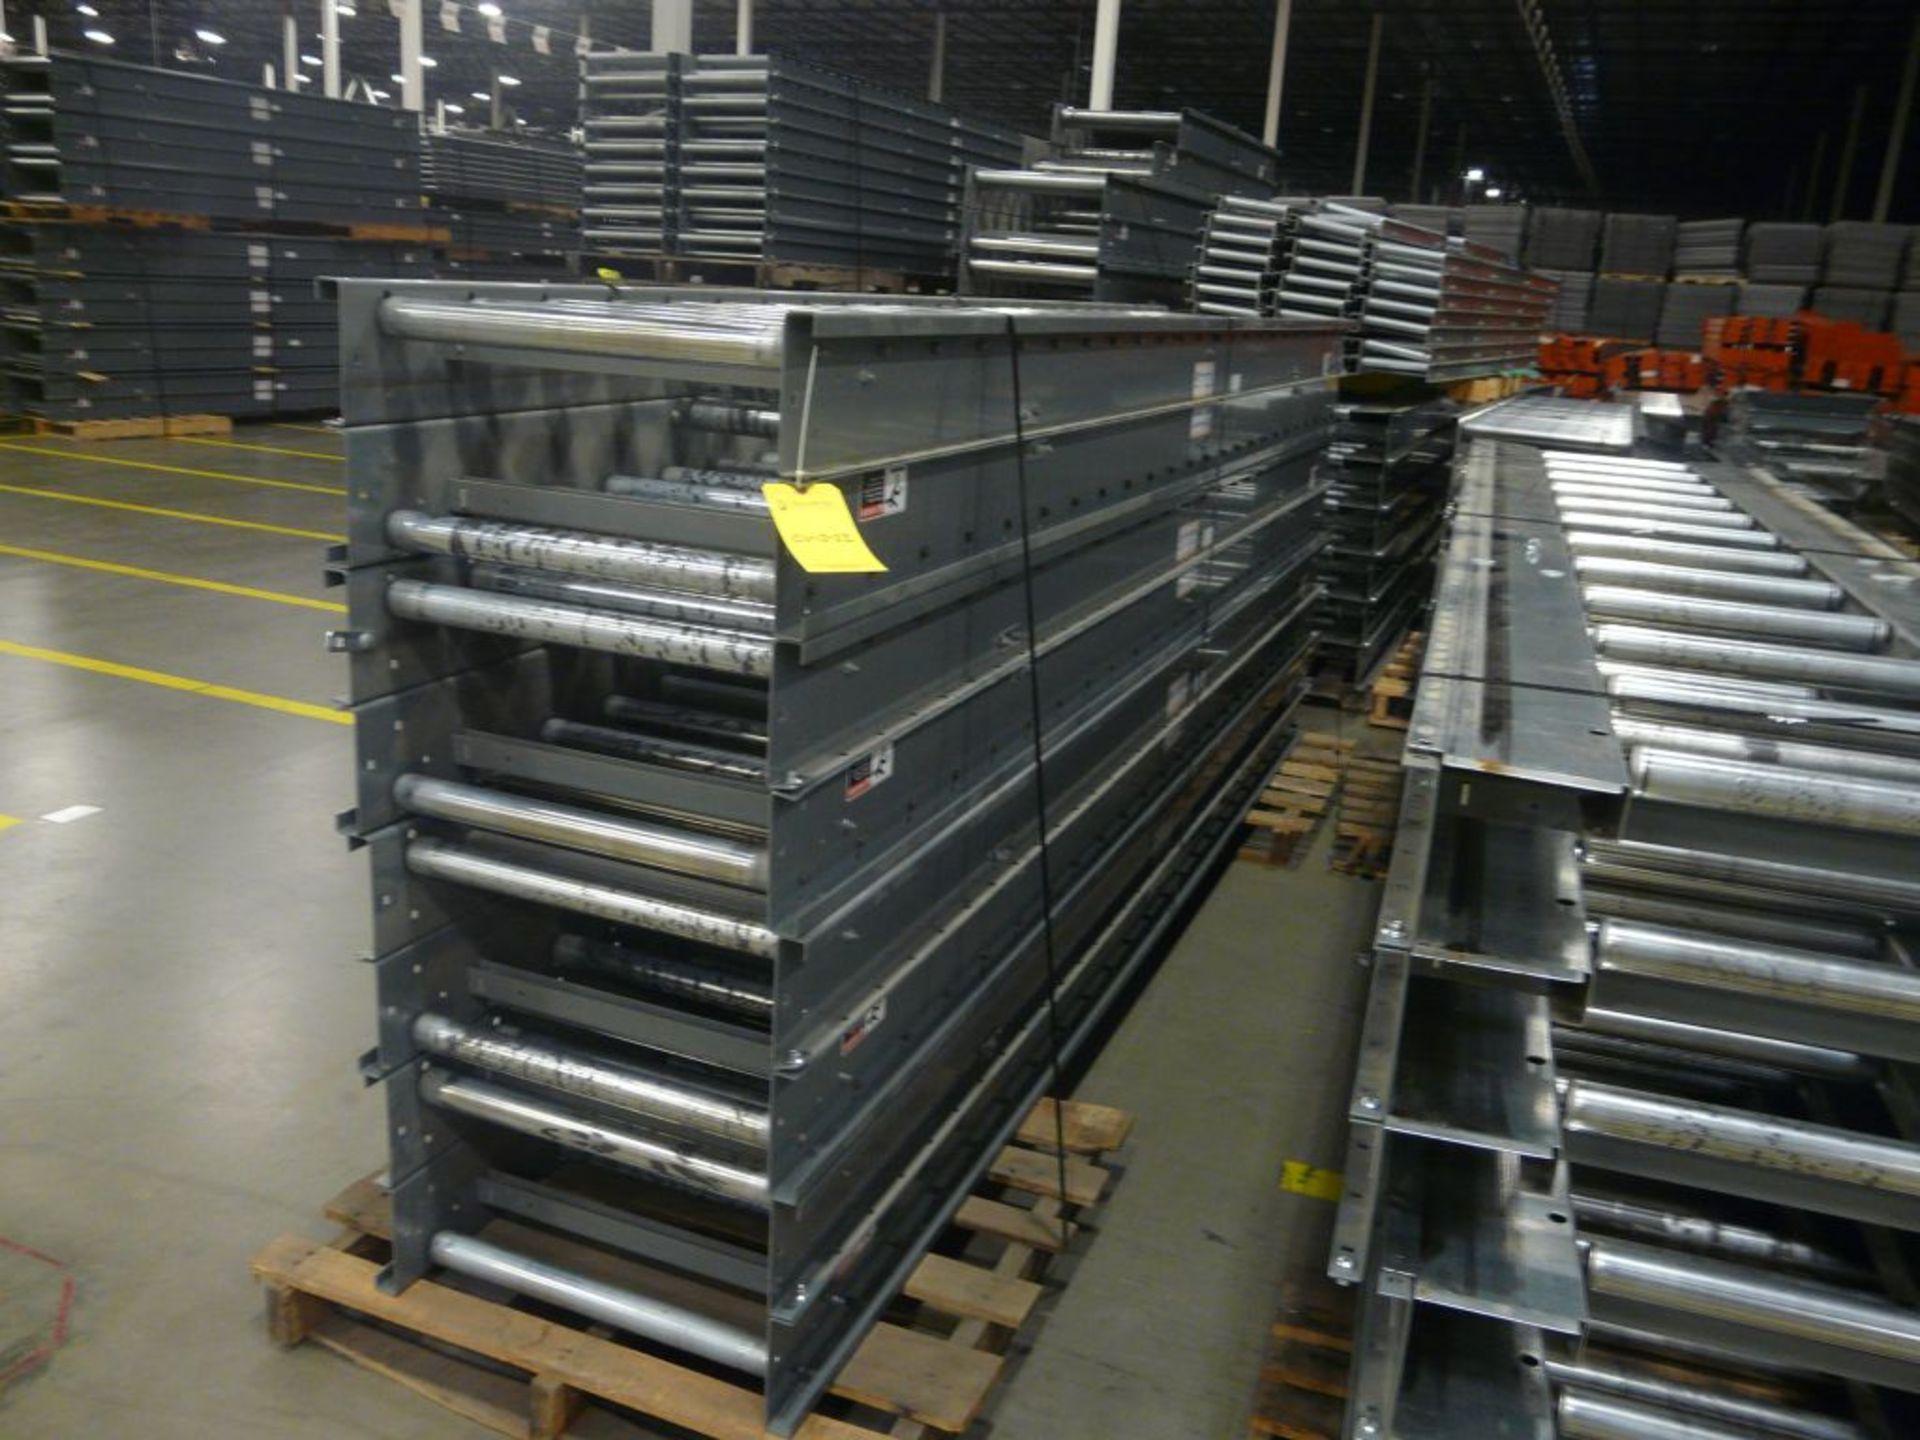 Lot of (30) 200 Belt Intermediate Conveyors - 12'L x 22"W; Tag: 223695 - $30 Lot Loading Fee - Image 2 of 3